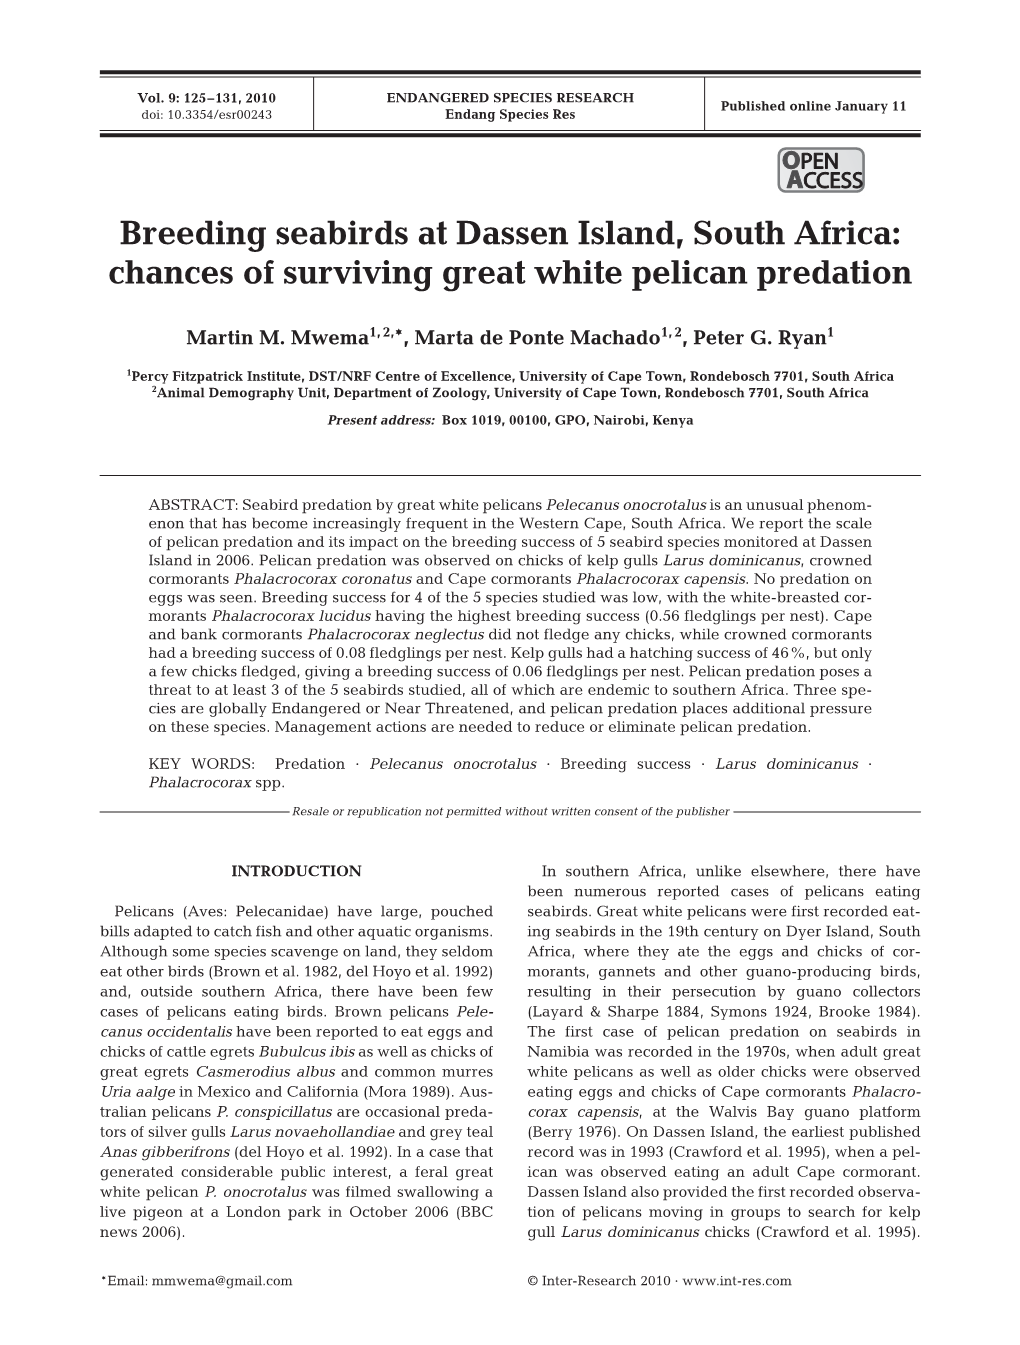 Breeding Seabirds at Dassen Island, South Africa: Chances of Surviving Great White Pelican Predation